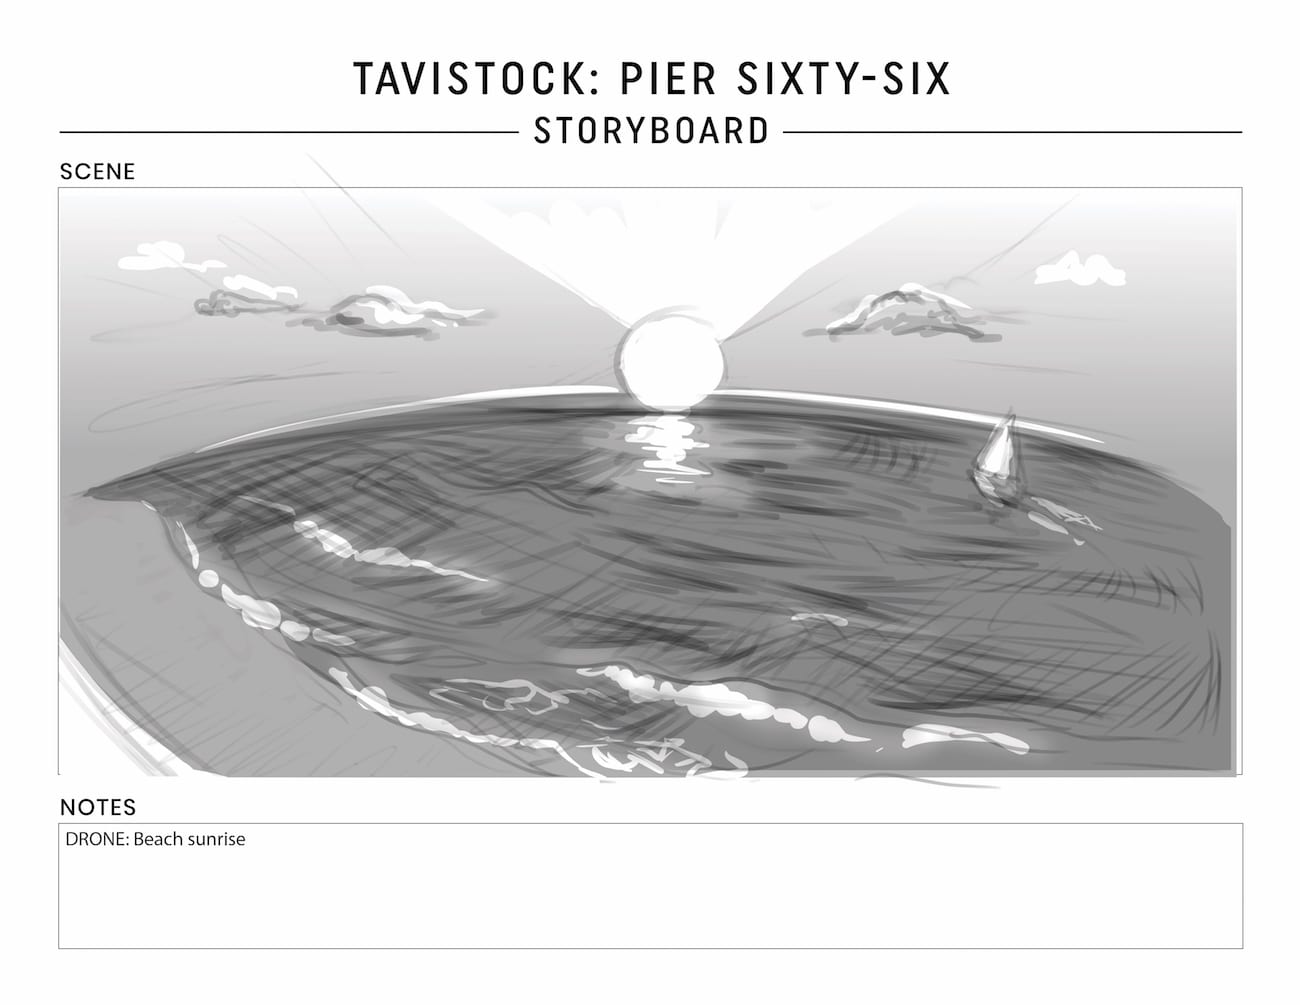 Tavistock Development Company C&I Studios Marketing Solutions Pier Sixty Six Storyboard Beach sunrise